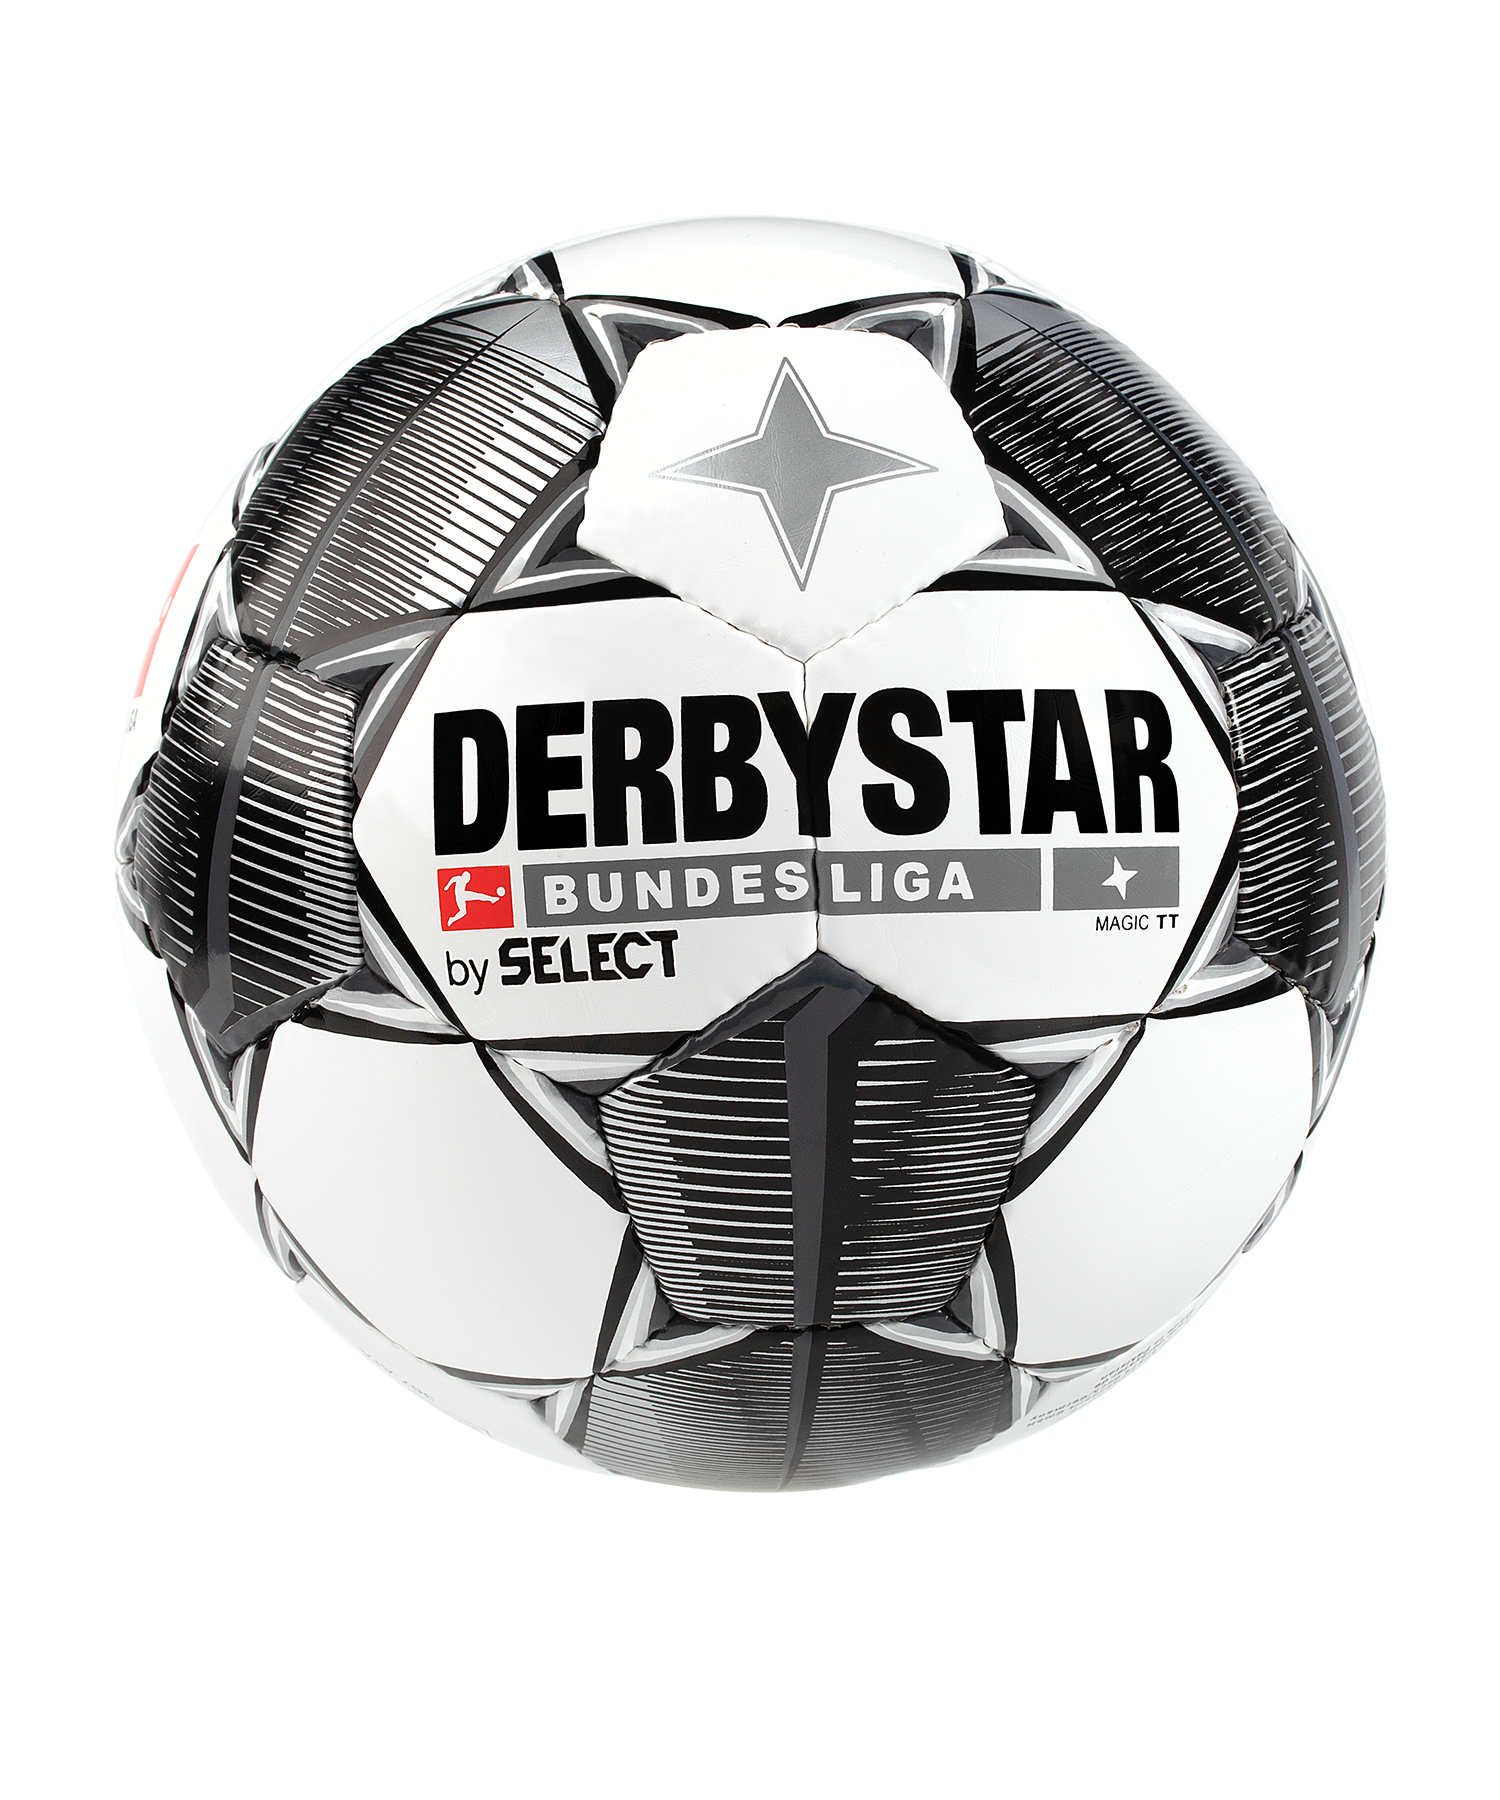 Derby Star APUS PRO TT CALCIO UVP 29,95 € 